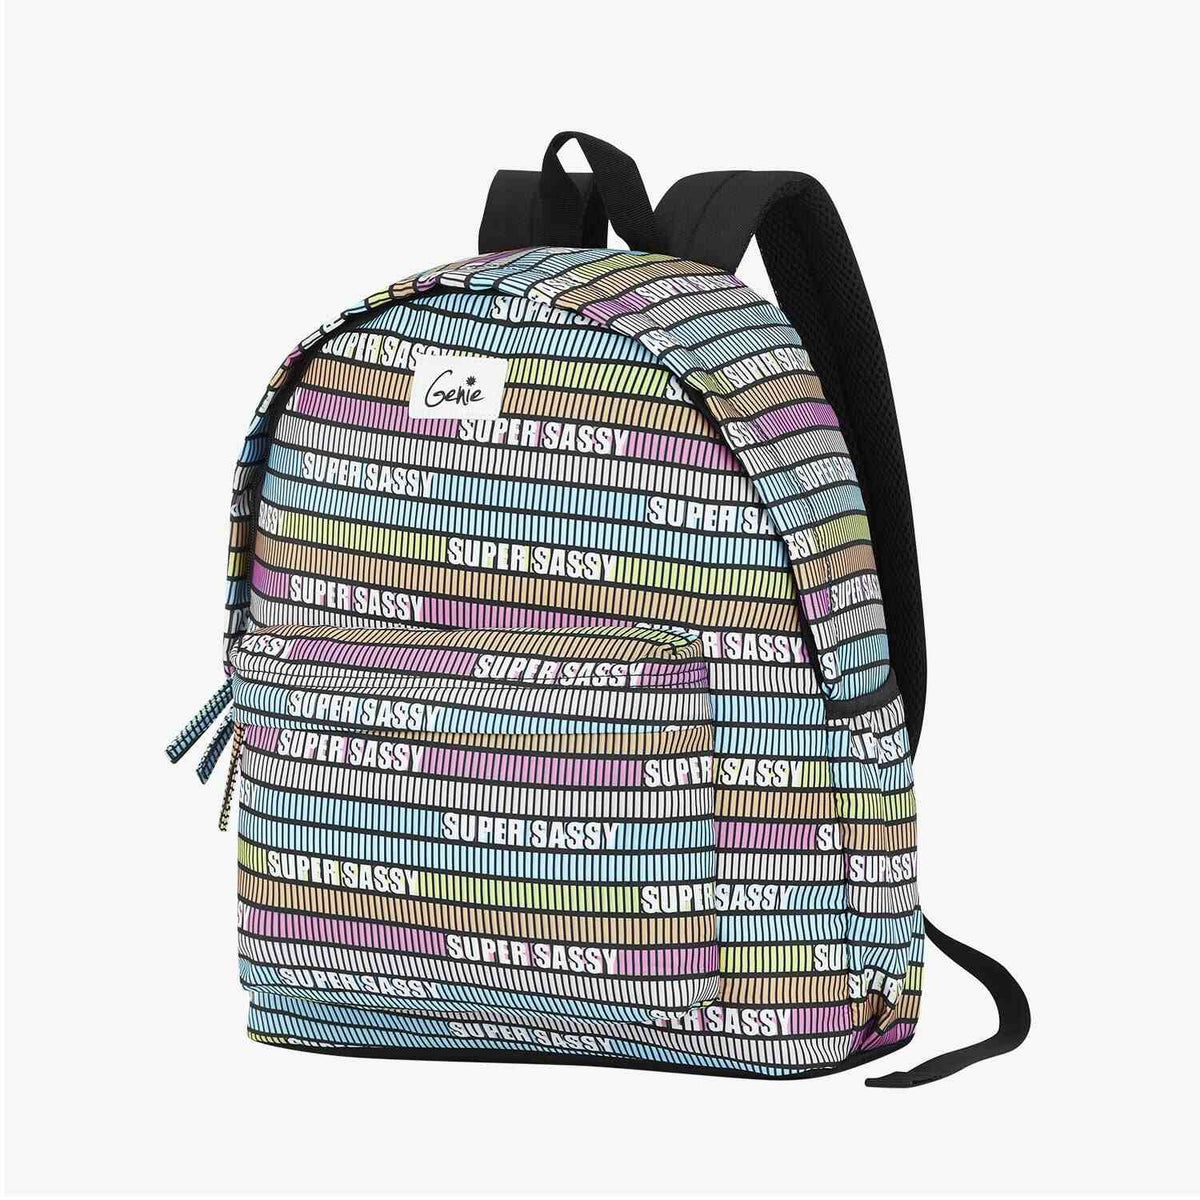 Buy Multicolor Backpacks For Girls Online in India